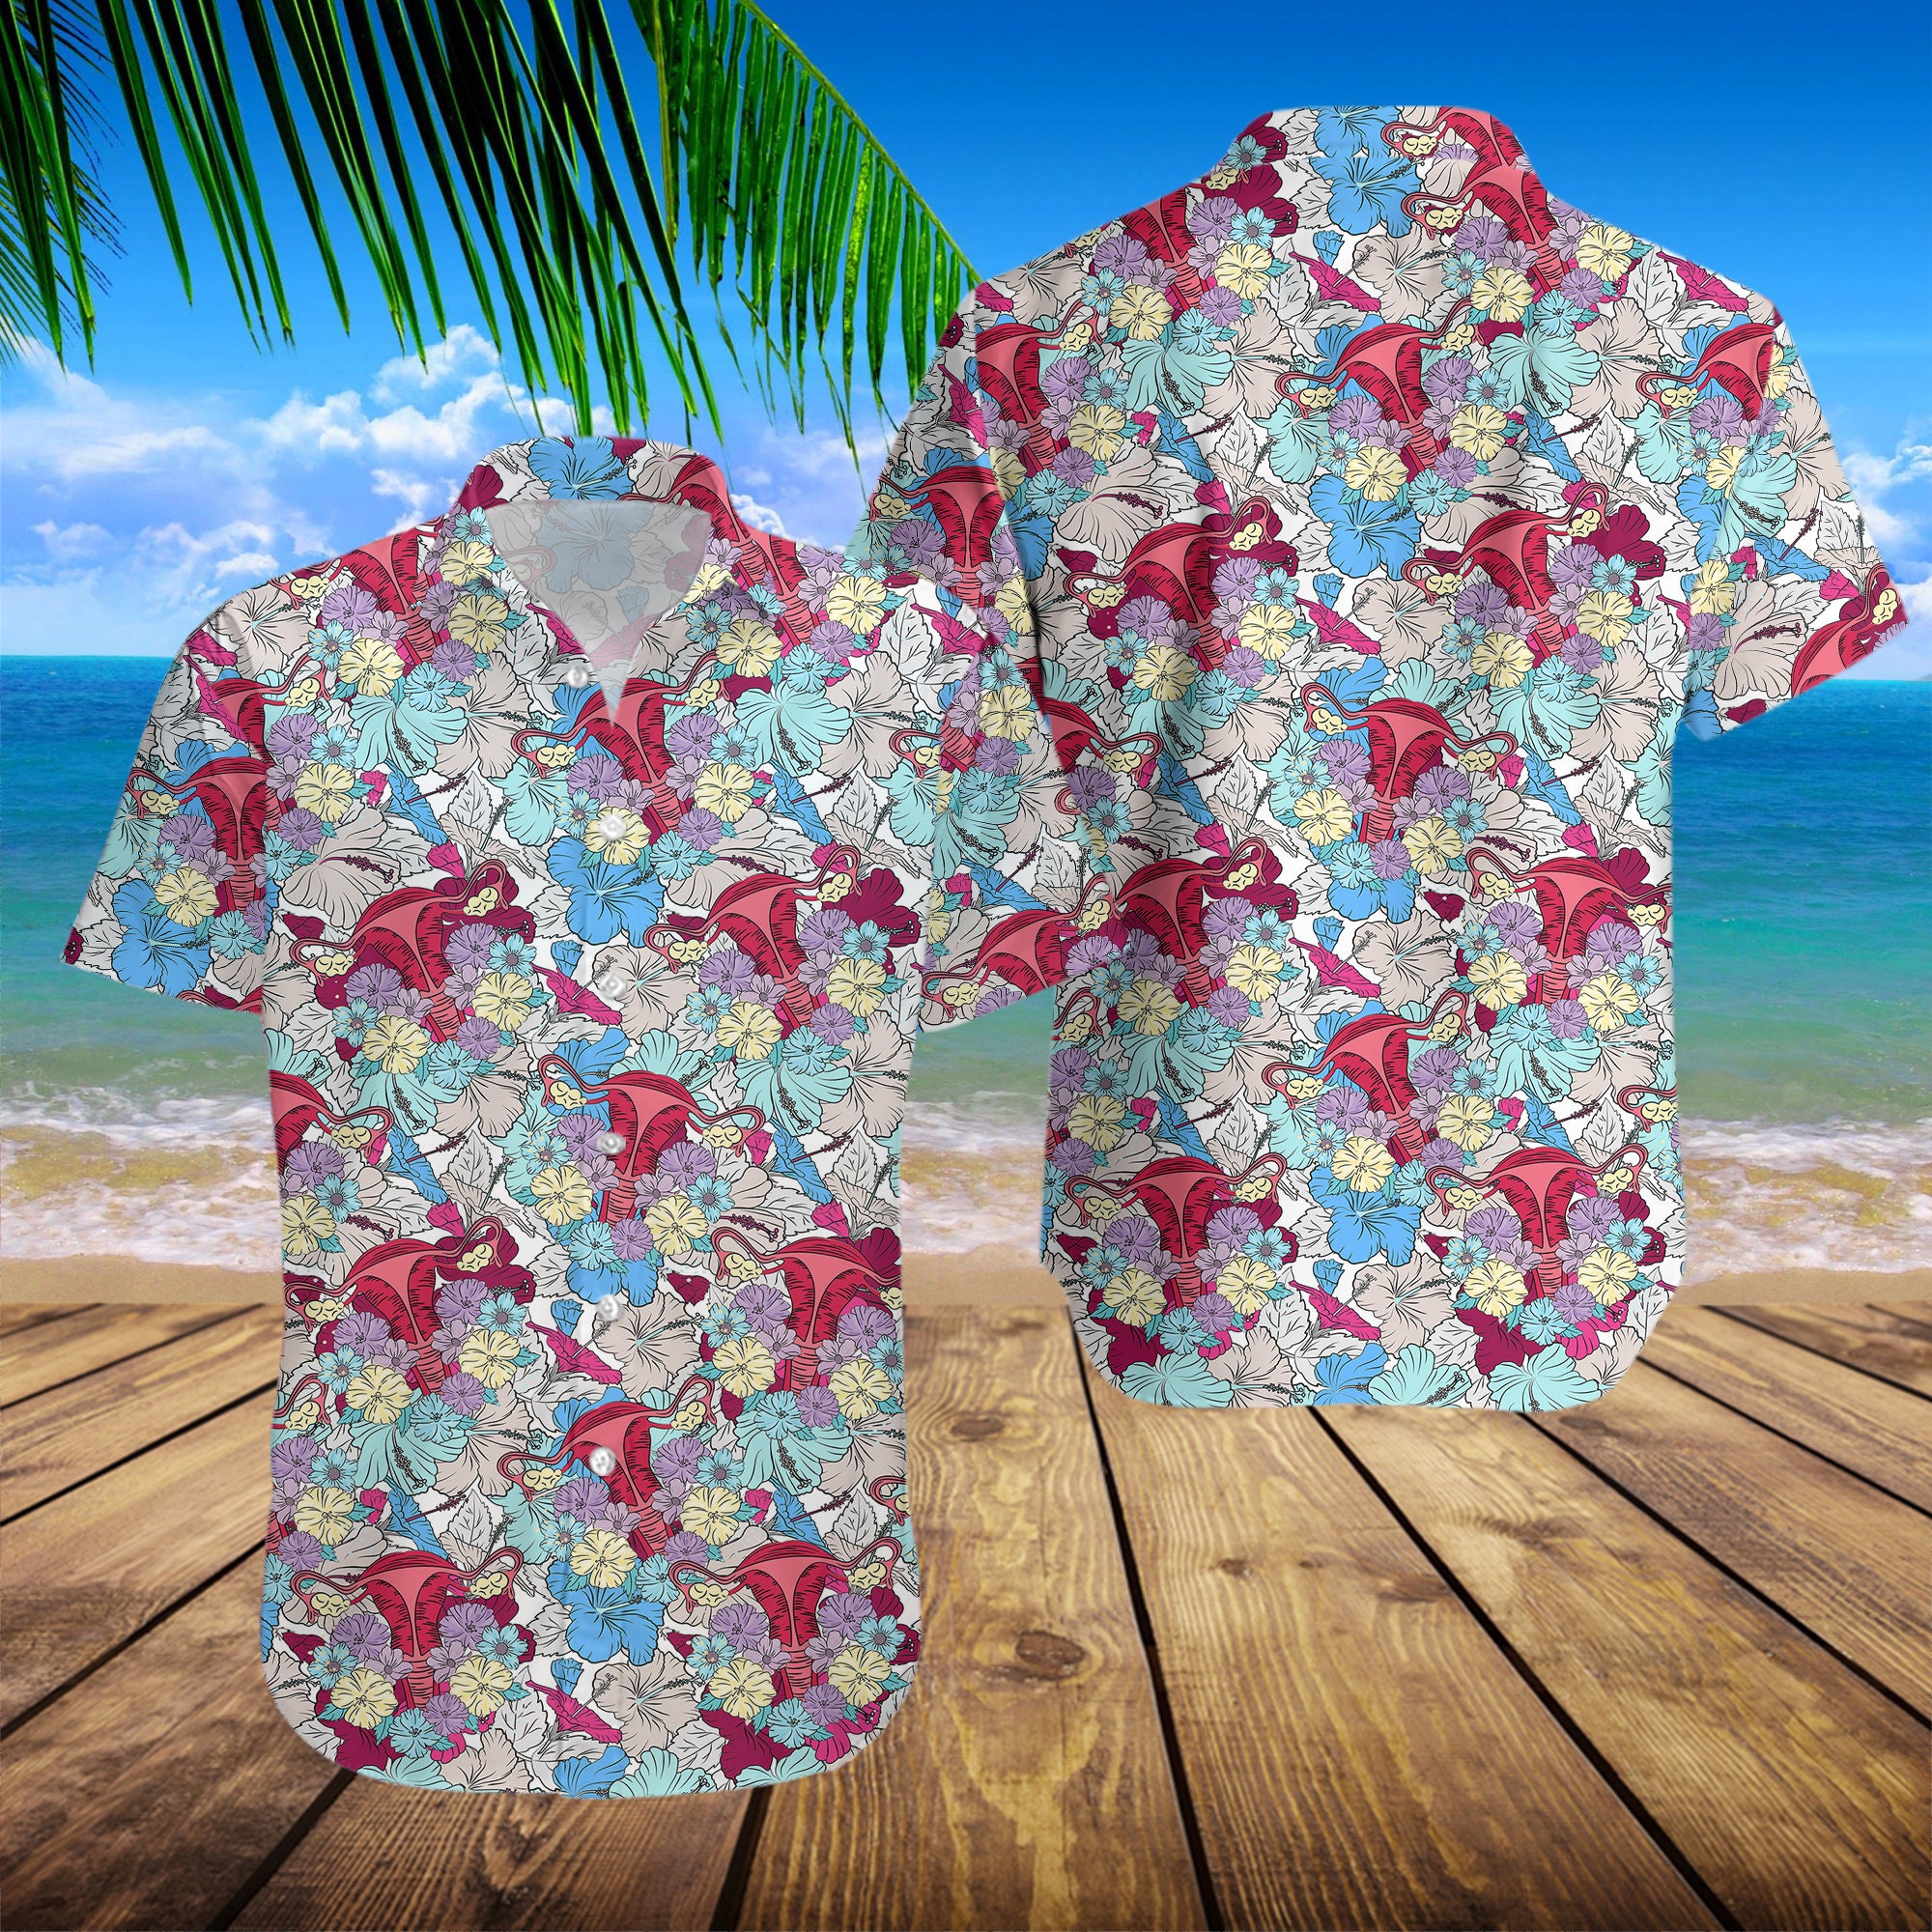 Mind Your Own Uterus Flower Womens Rights Pro Choice Summer Hawaiian Shirt